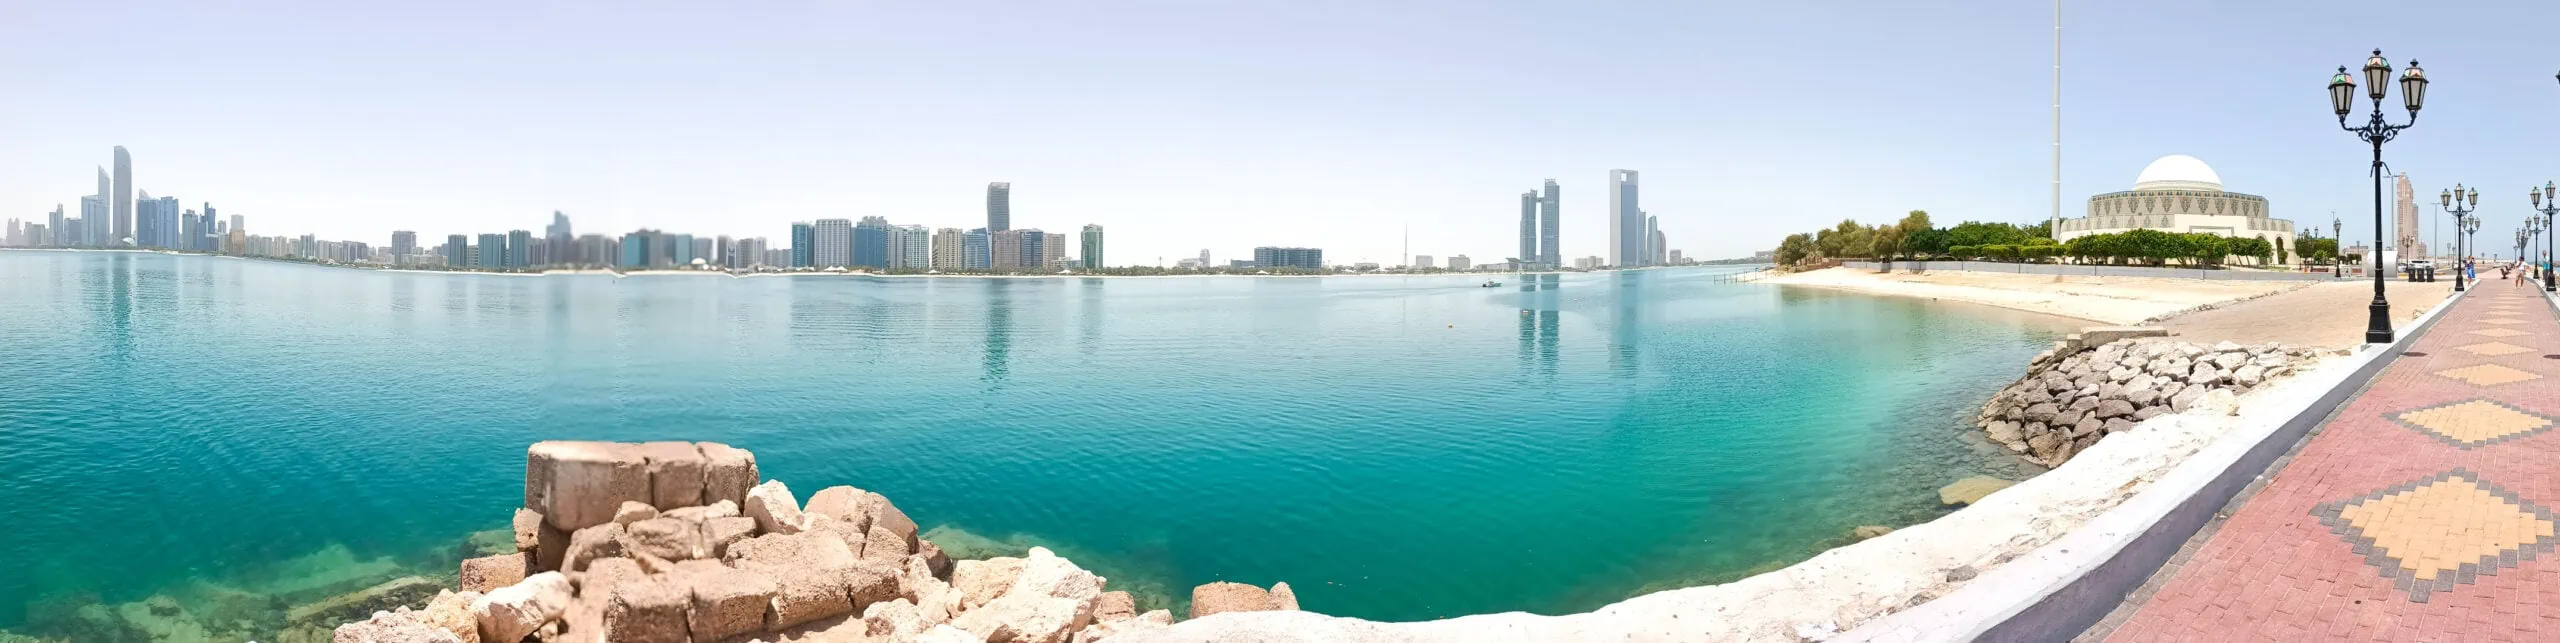 Skyline van Abu Dhabi